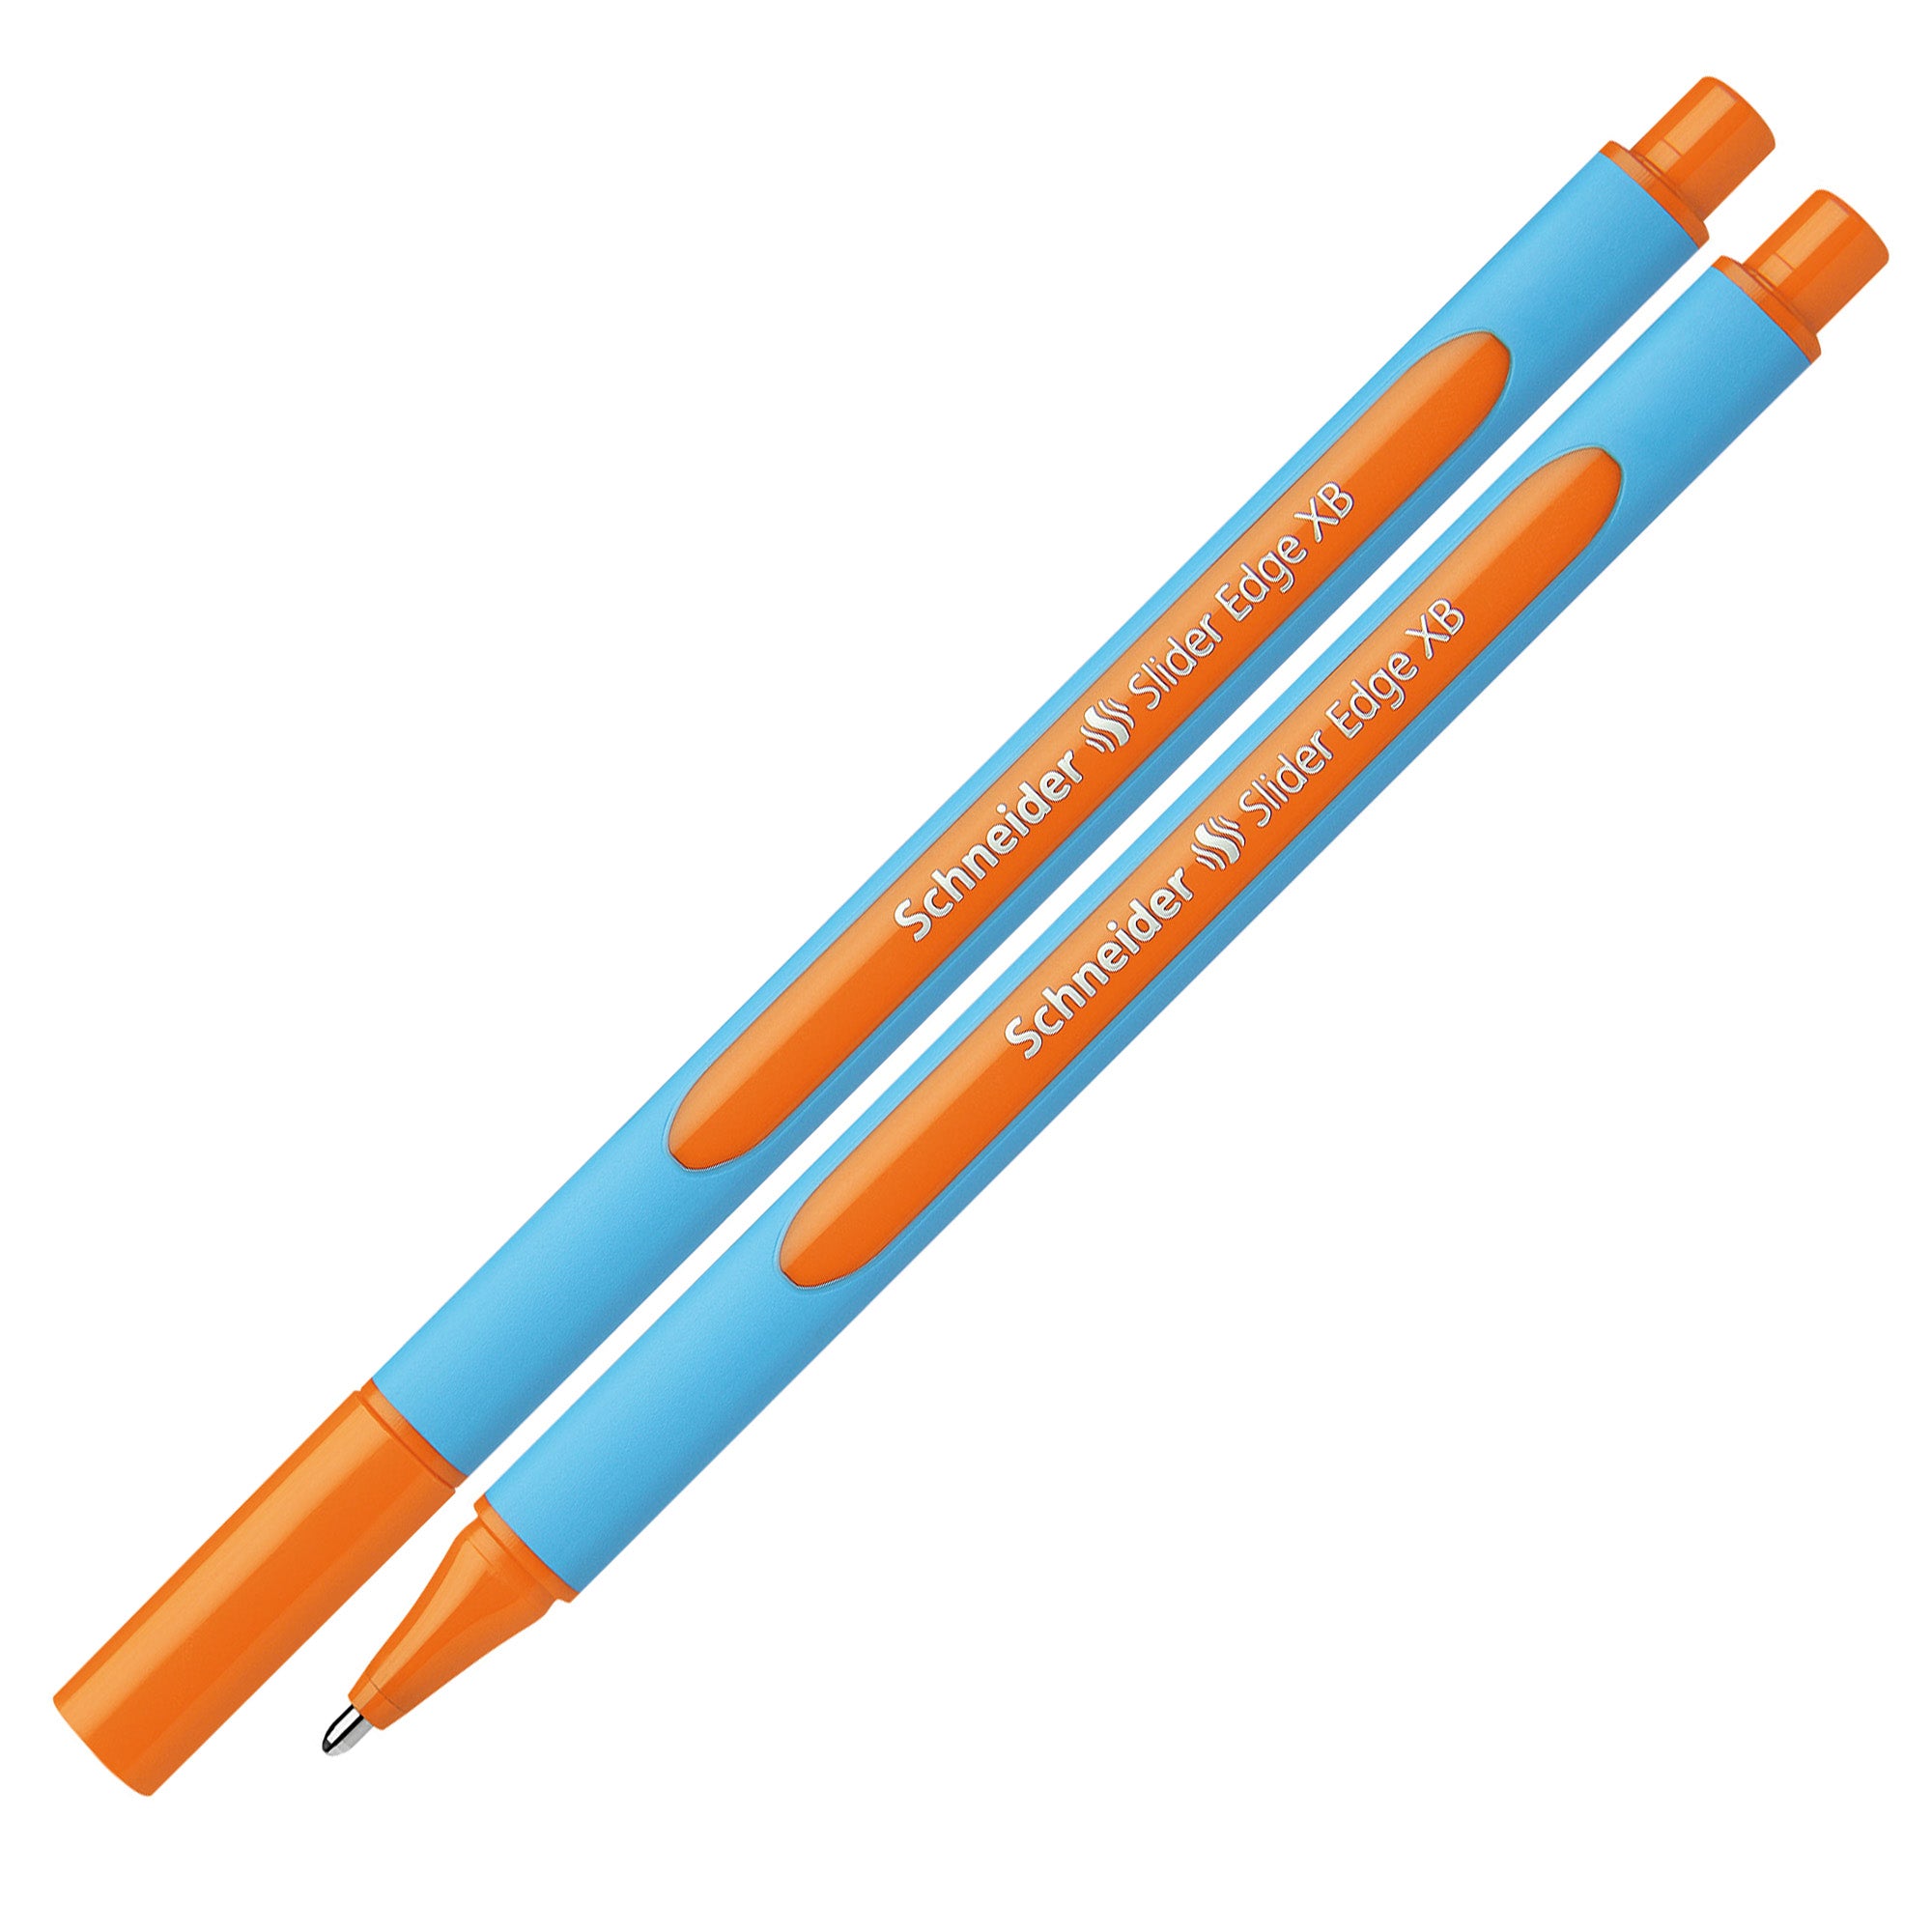 schneider-penna-sfera-slider-edge-xb-arancione